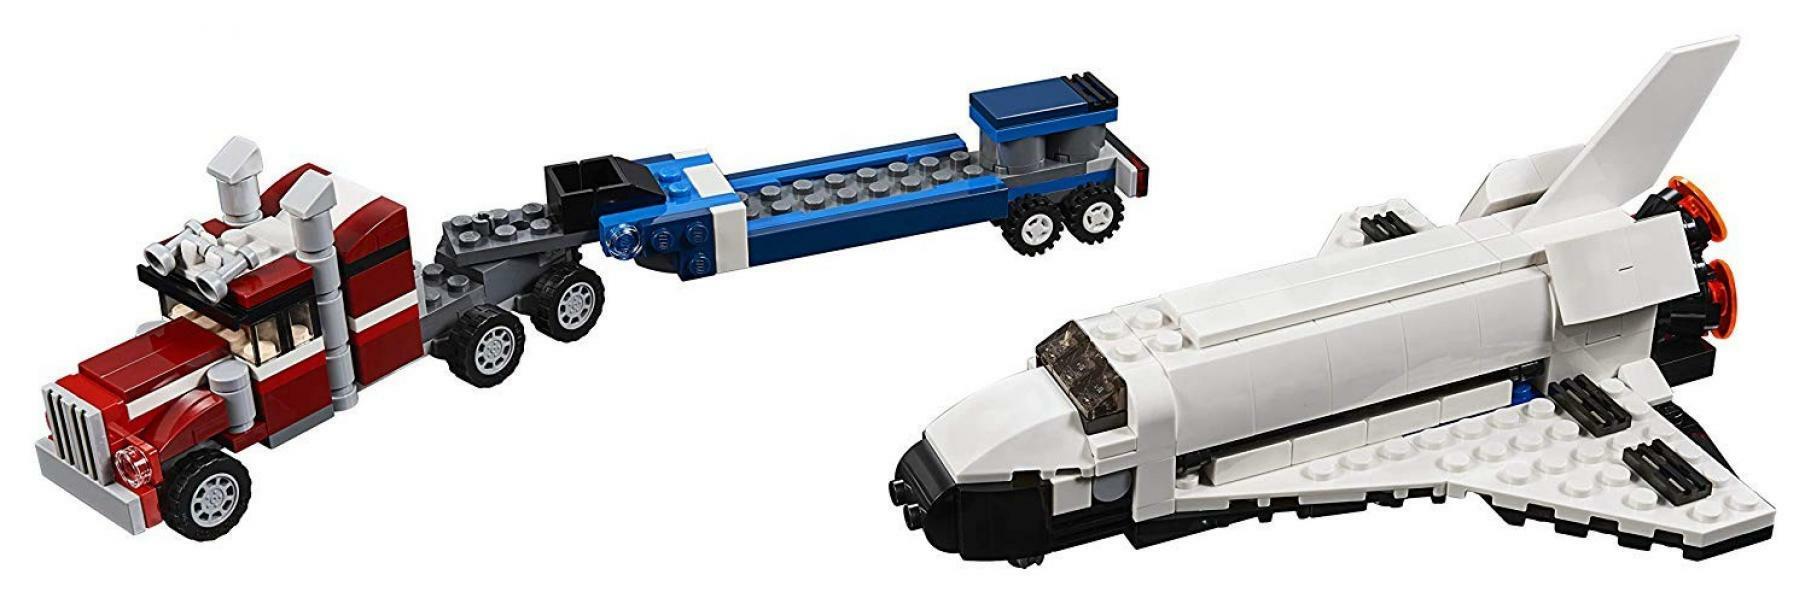 lego lego creator 31091 - trasportatore di shuttle